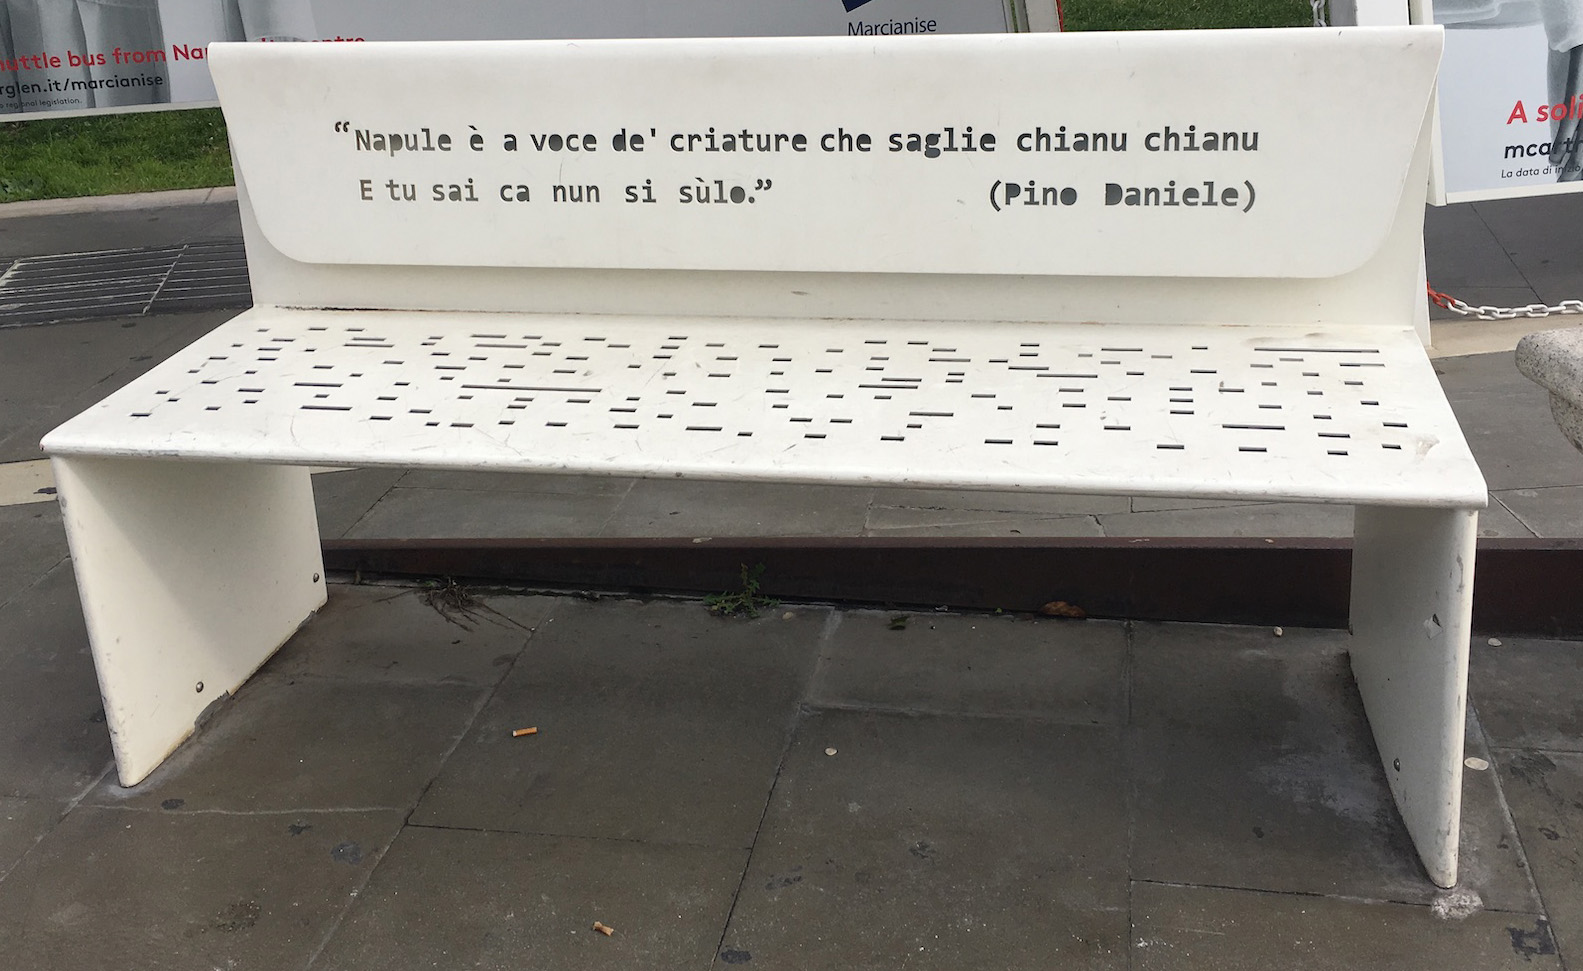 Una panchina dedicata a Pino Daniele all'uscita dall'aeroporto